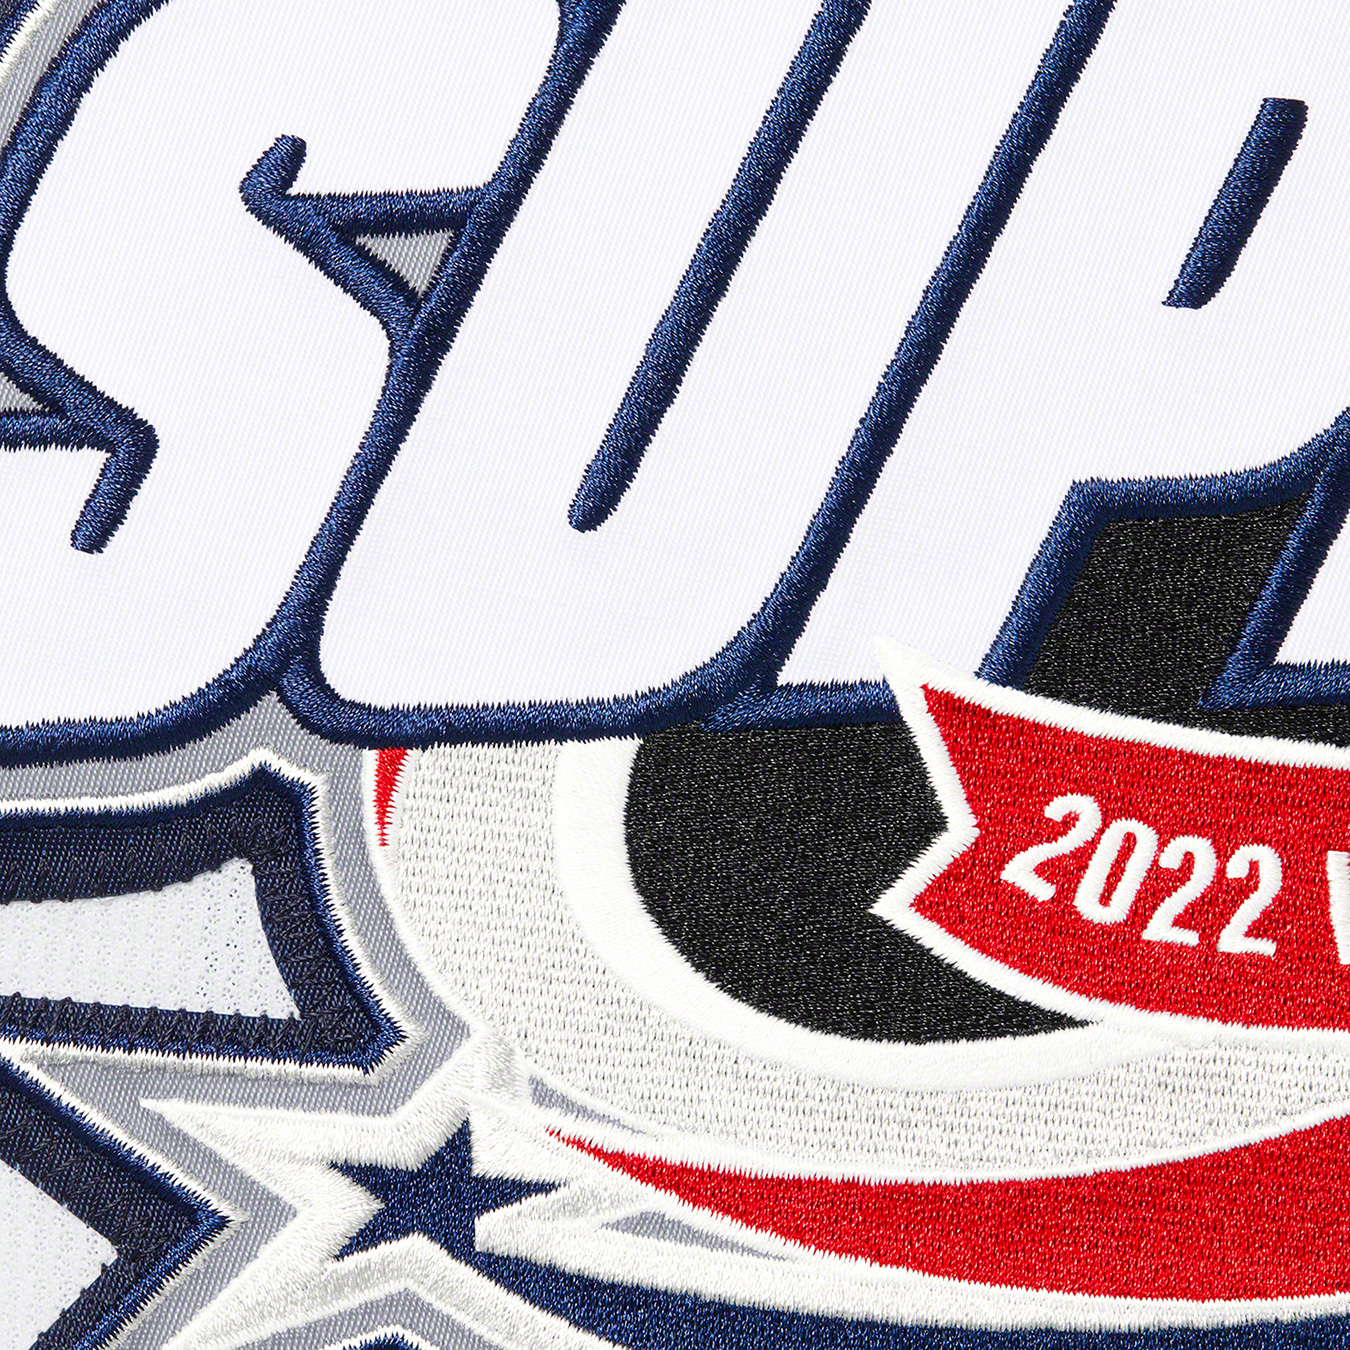 Supreme®/CCM® All Stars Hockey Jersey